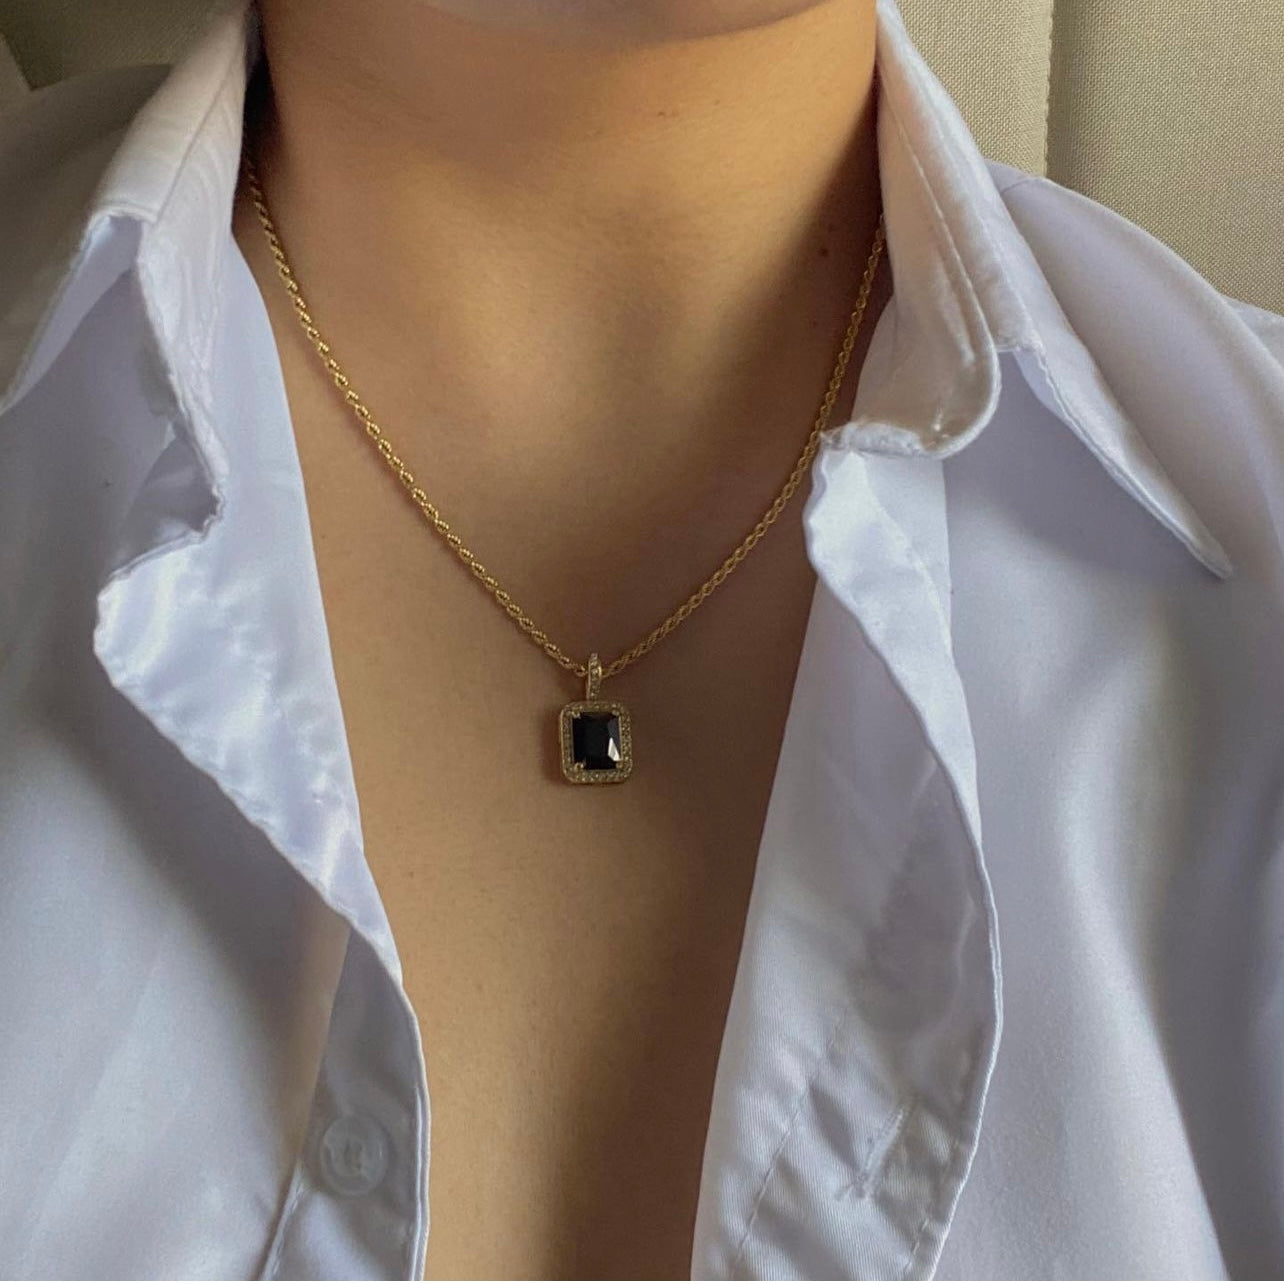 Teresa necklace